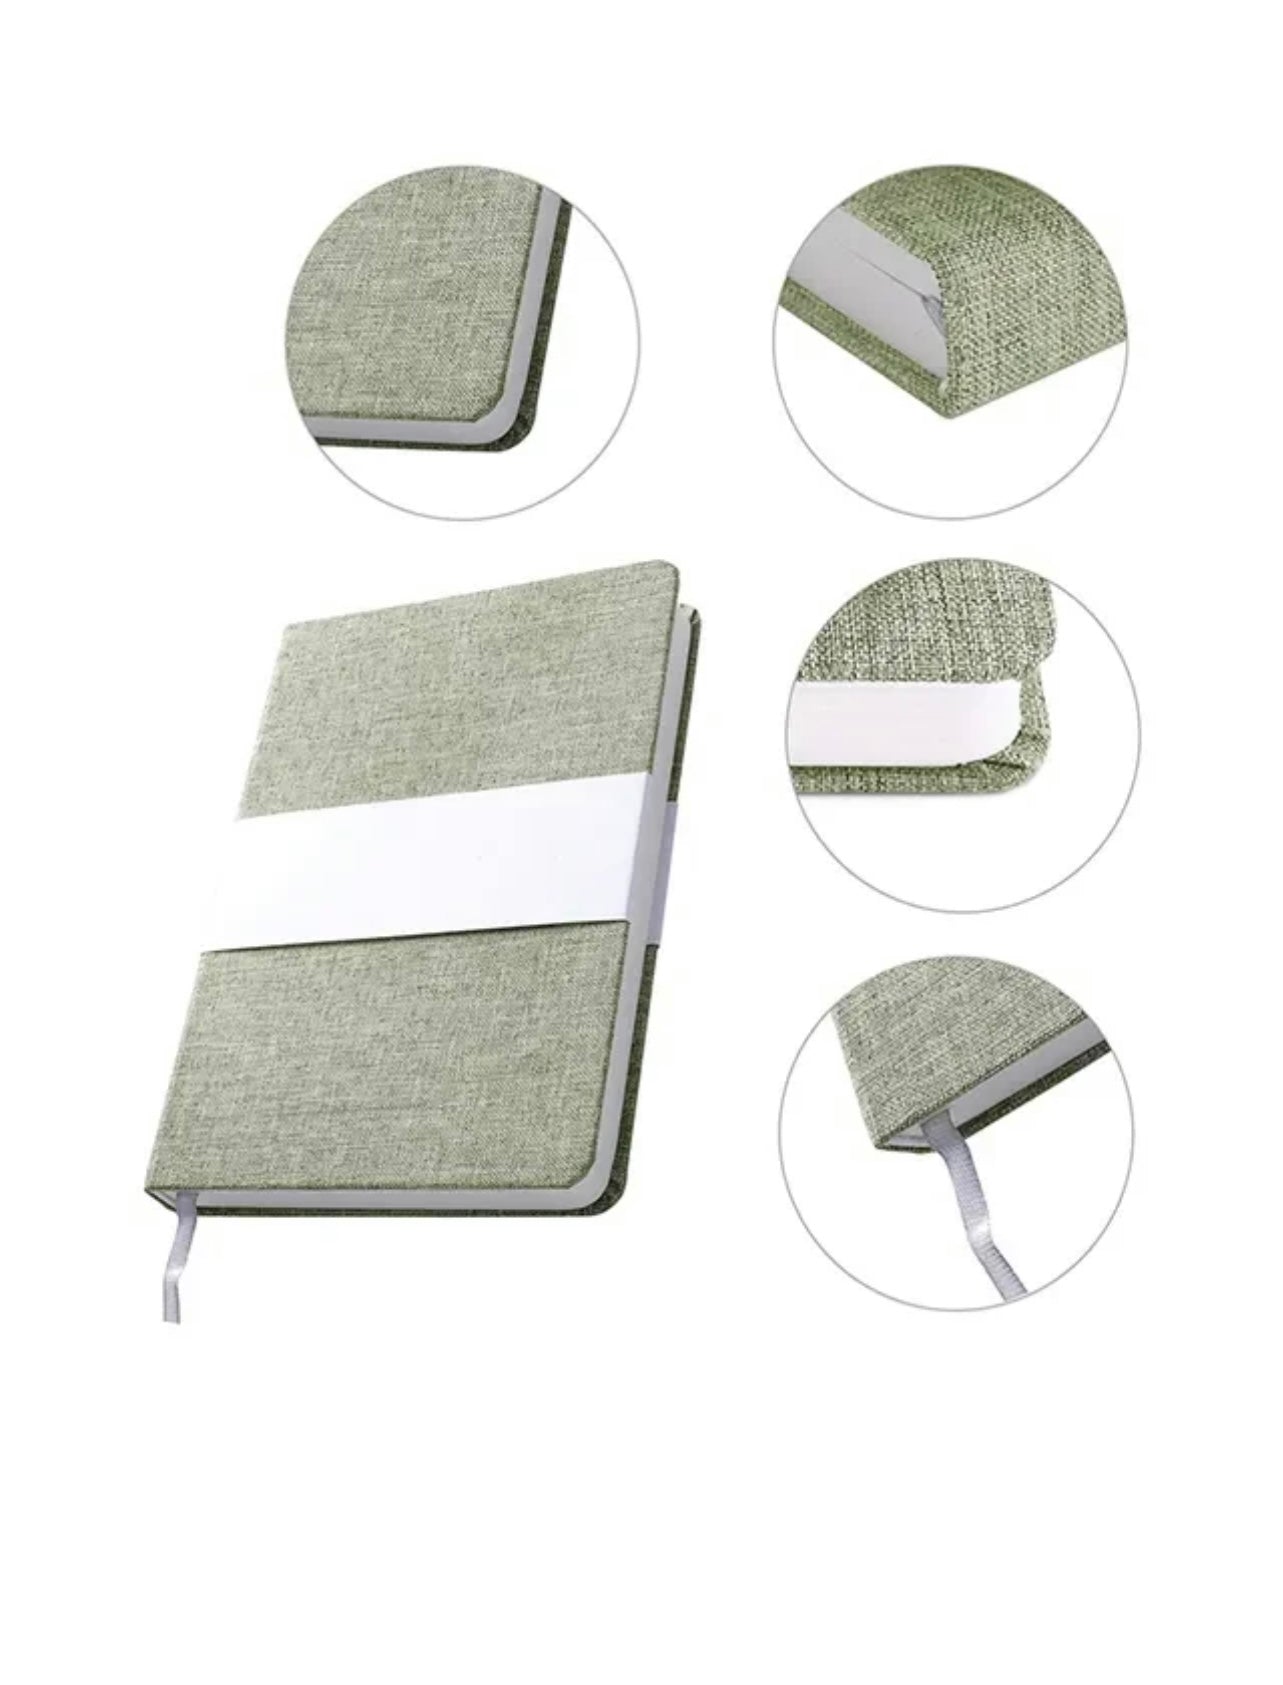 Design Personalized Green Linen Journal